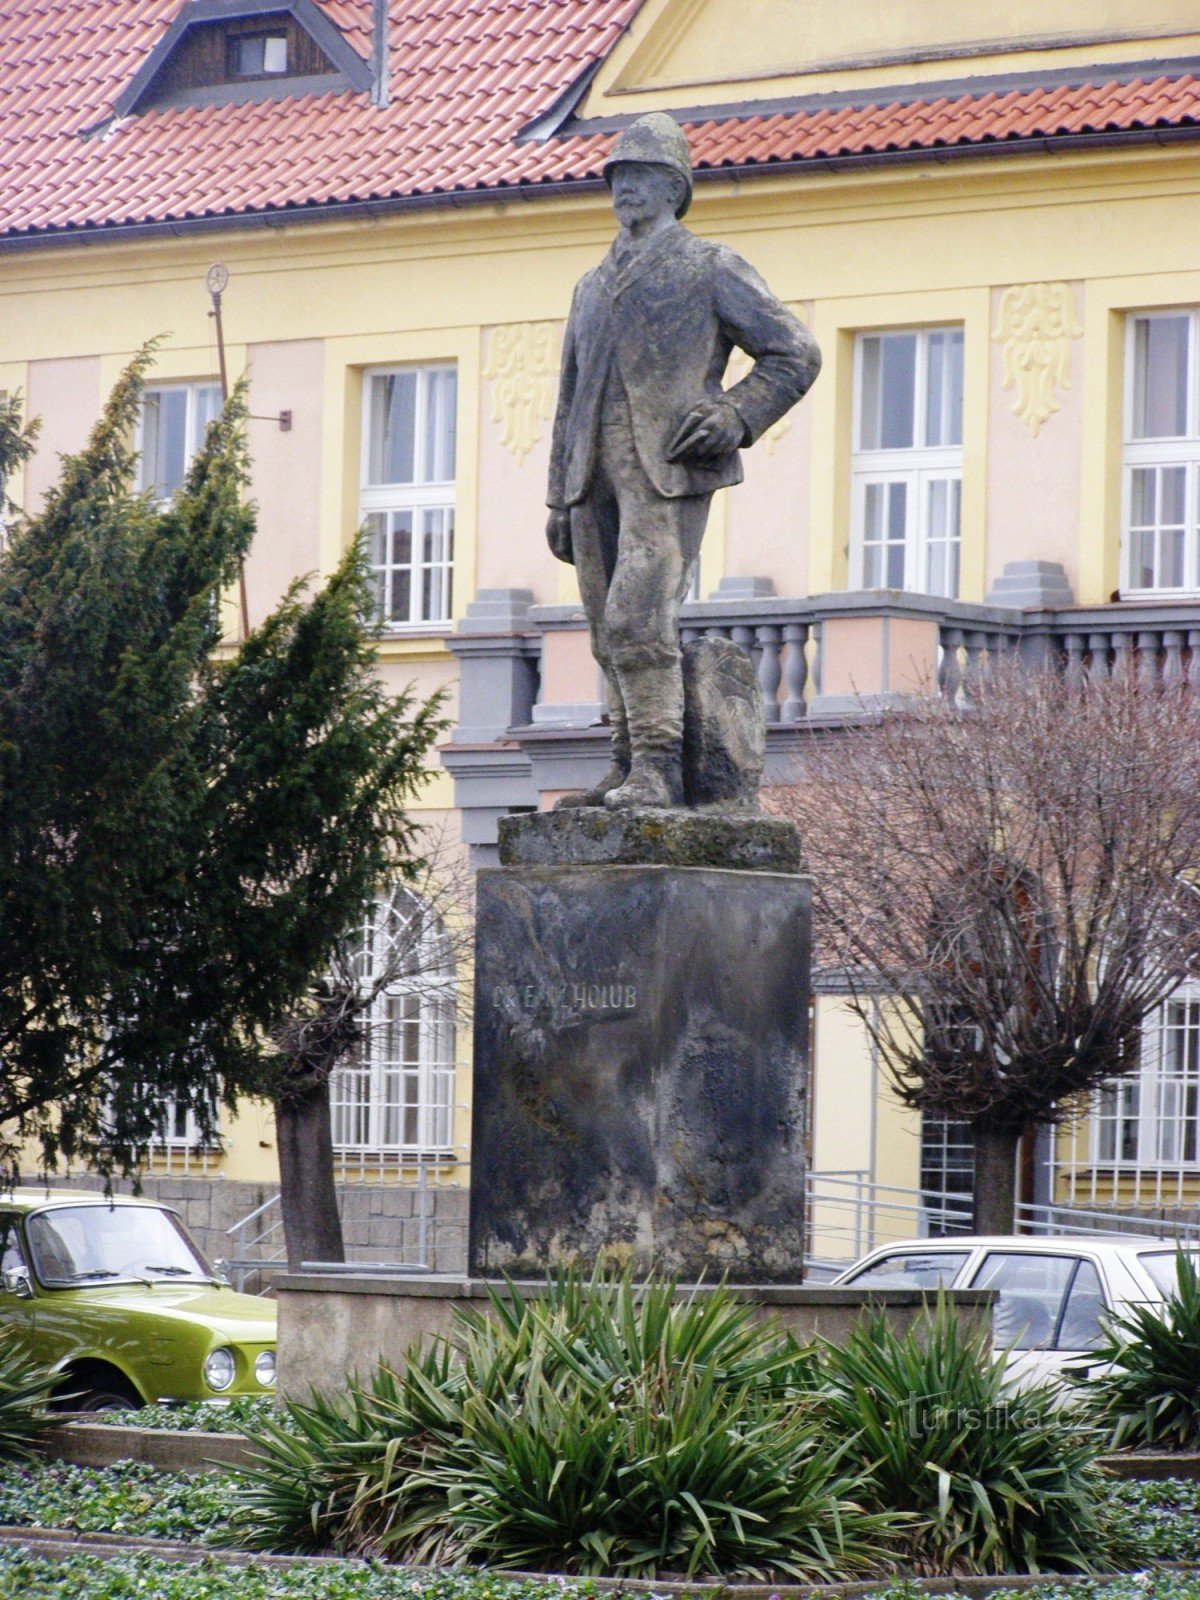 Holice in Boemia - statua del Dr. Emil Holuba